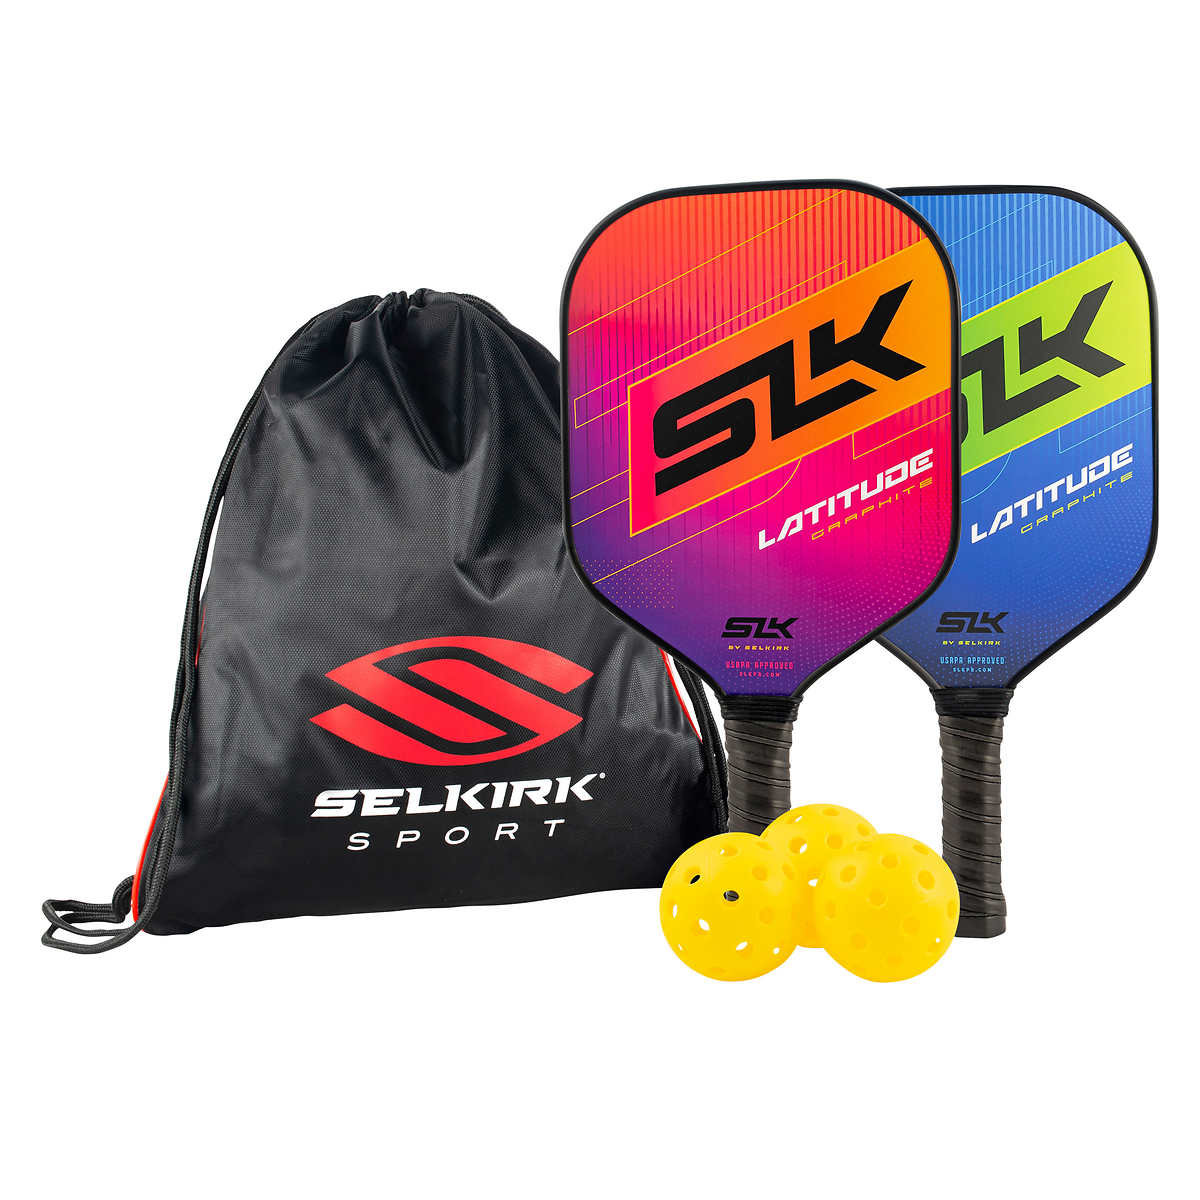 Selkirk SLK Latitude Pickleball Bundle- 2 Paddles, 3 Balls, and 1 Bag (Used)